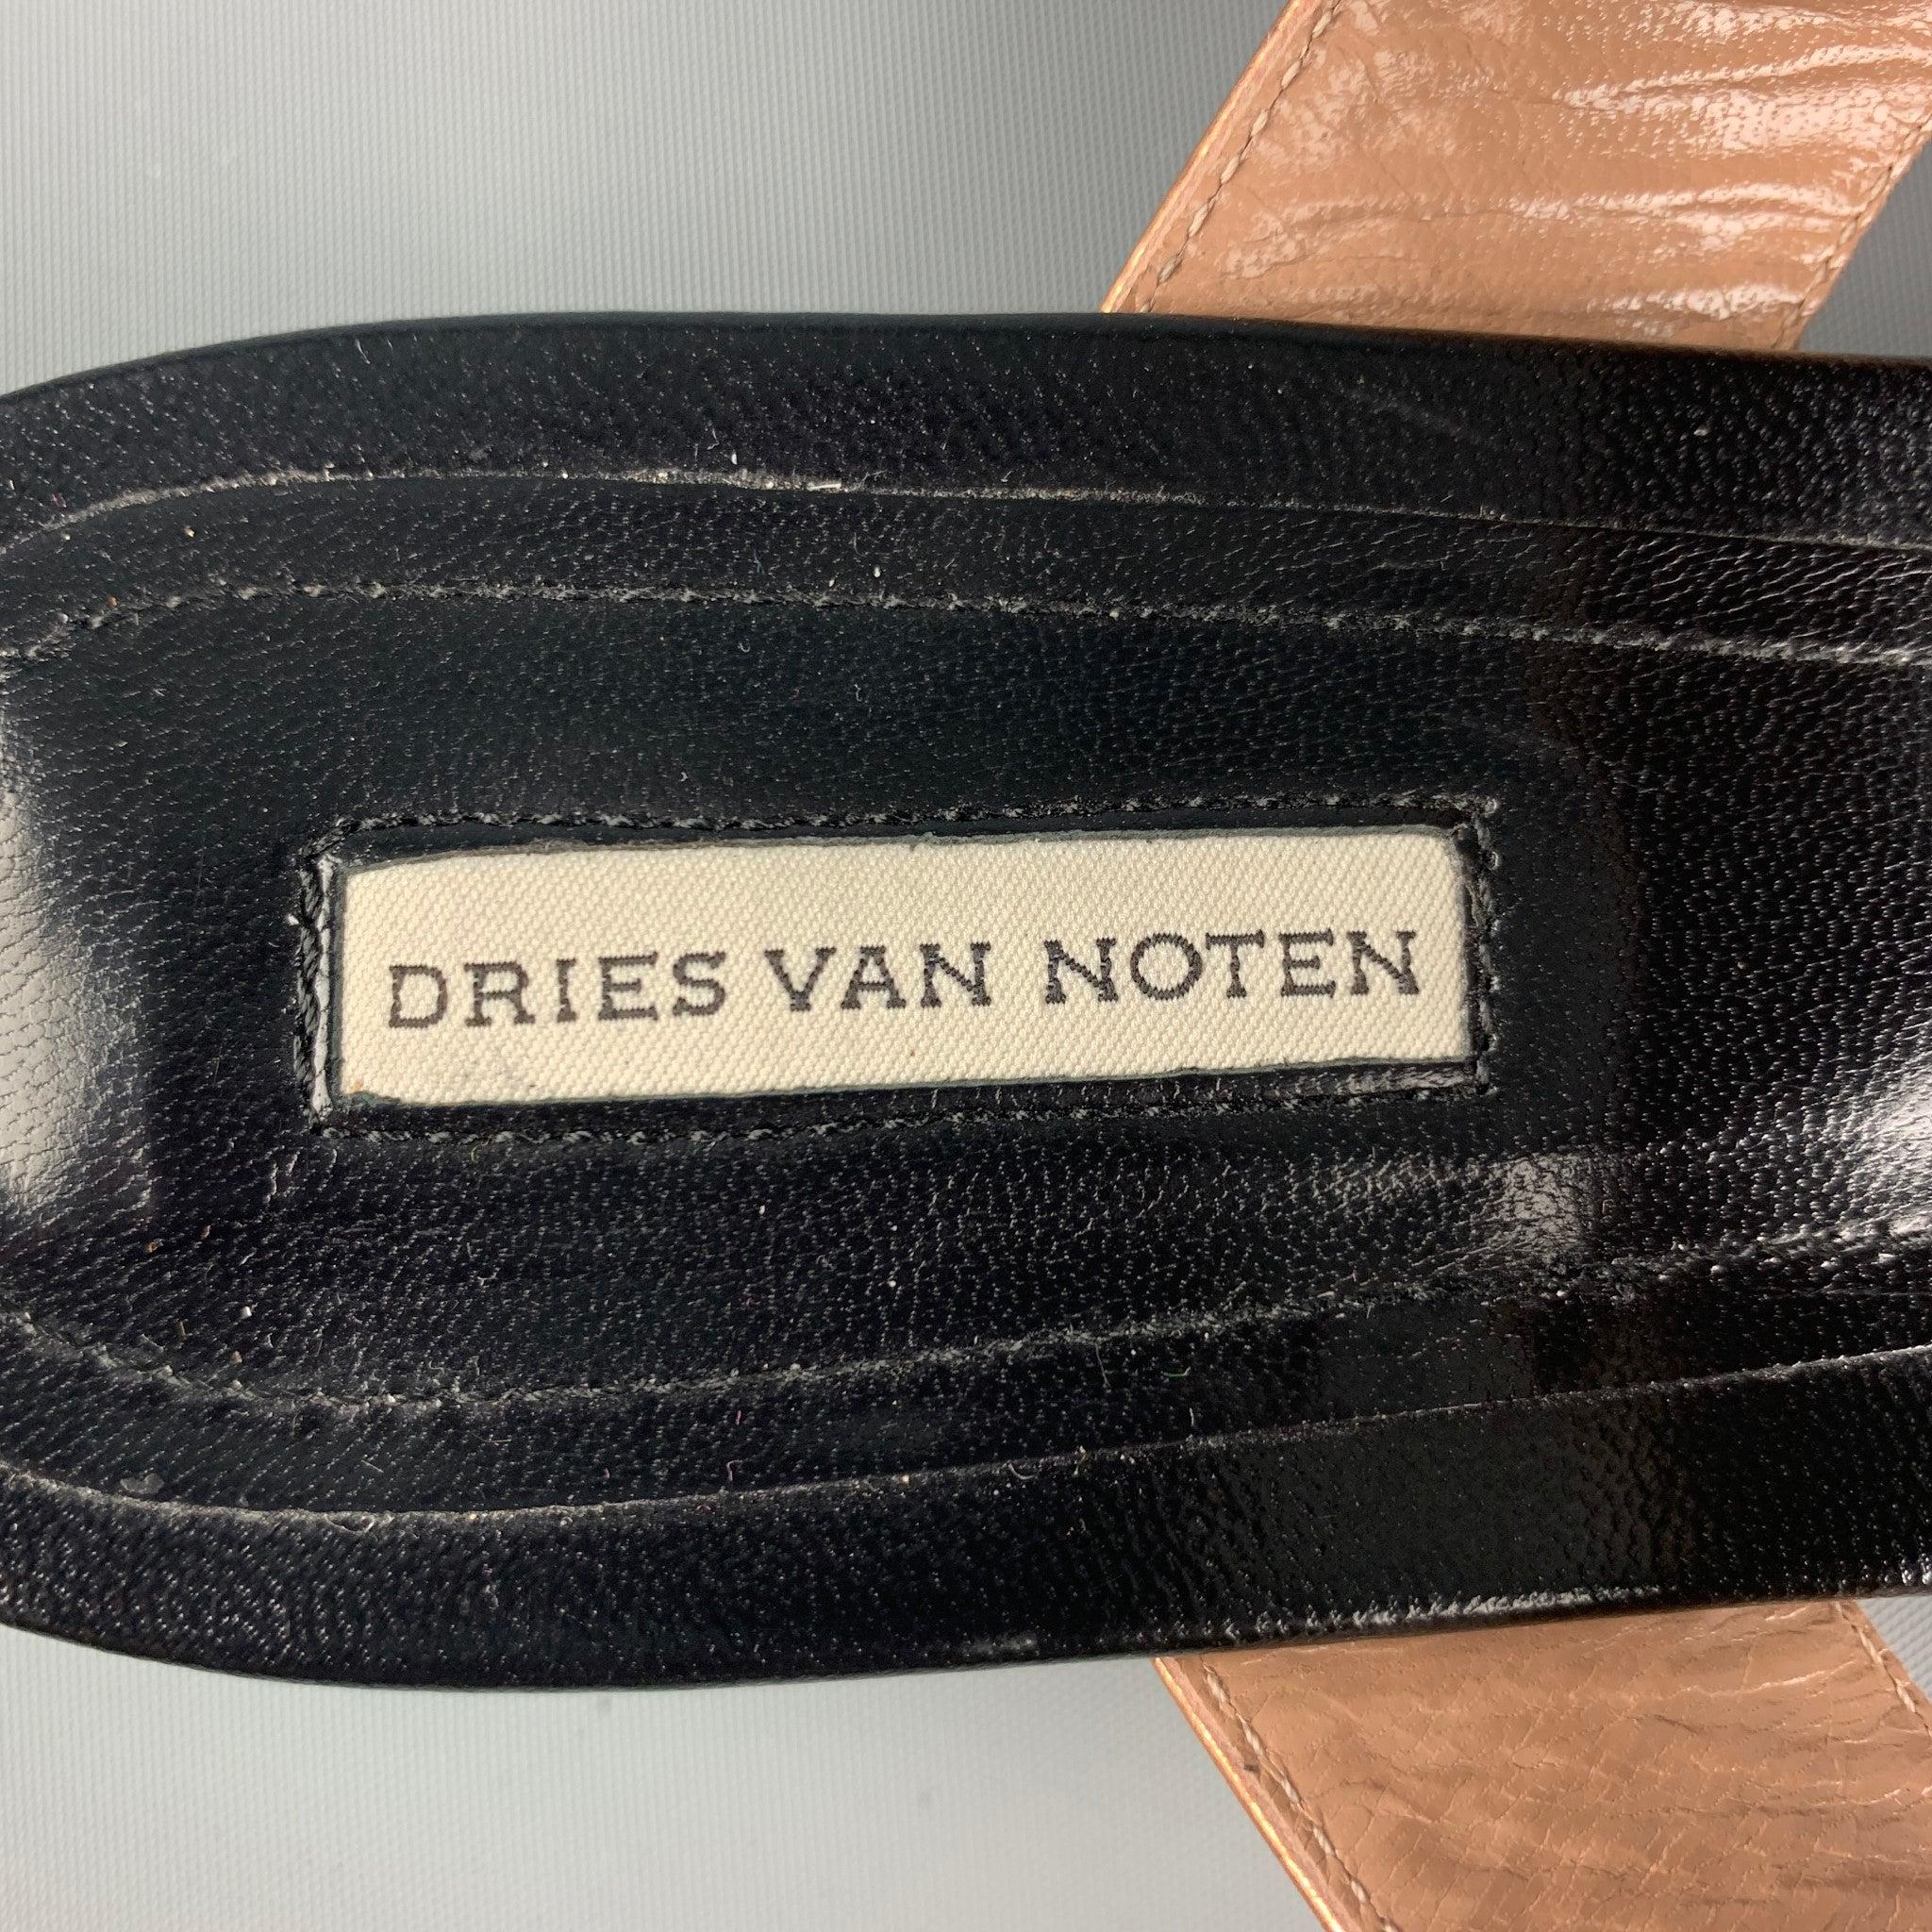 DRIES VAN NOTEN Size 8.5 Black, Gold &  Green Patent Leather Flat Sandals 2